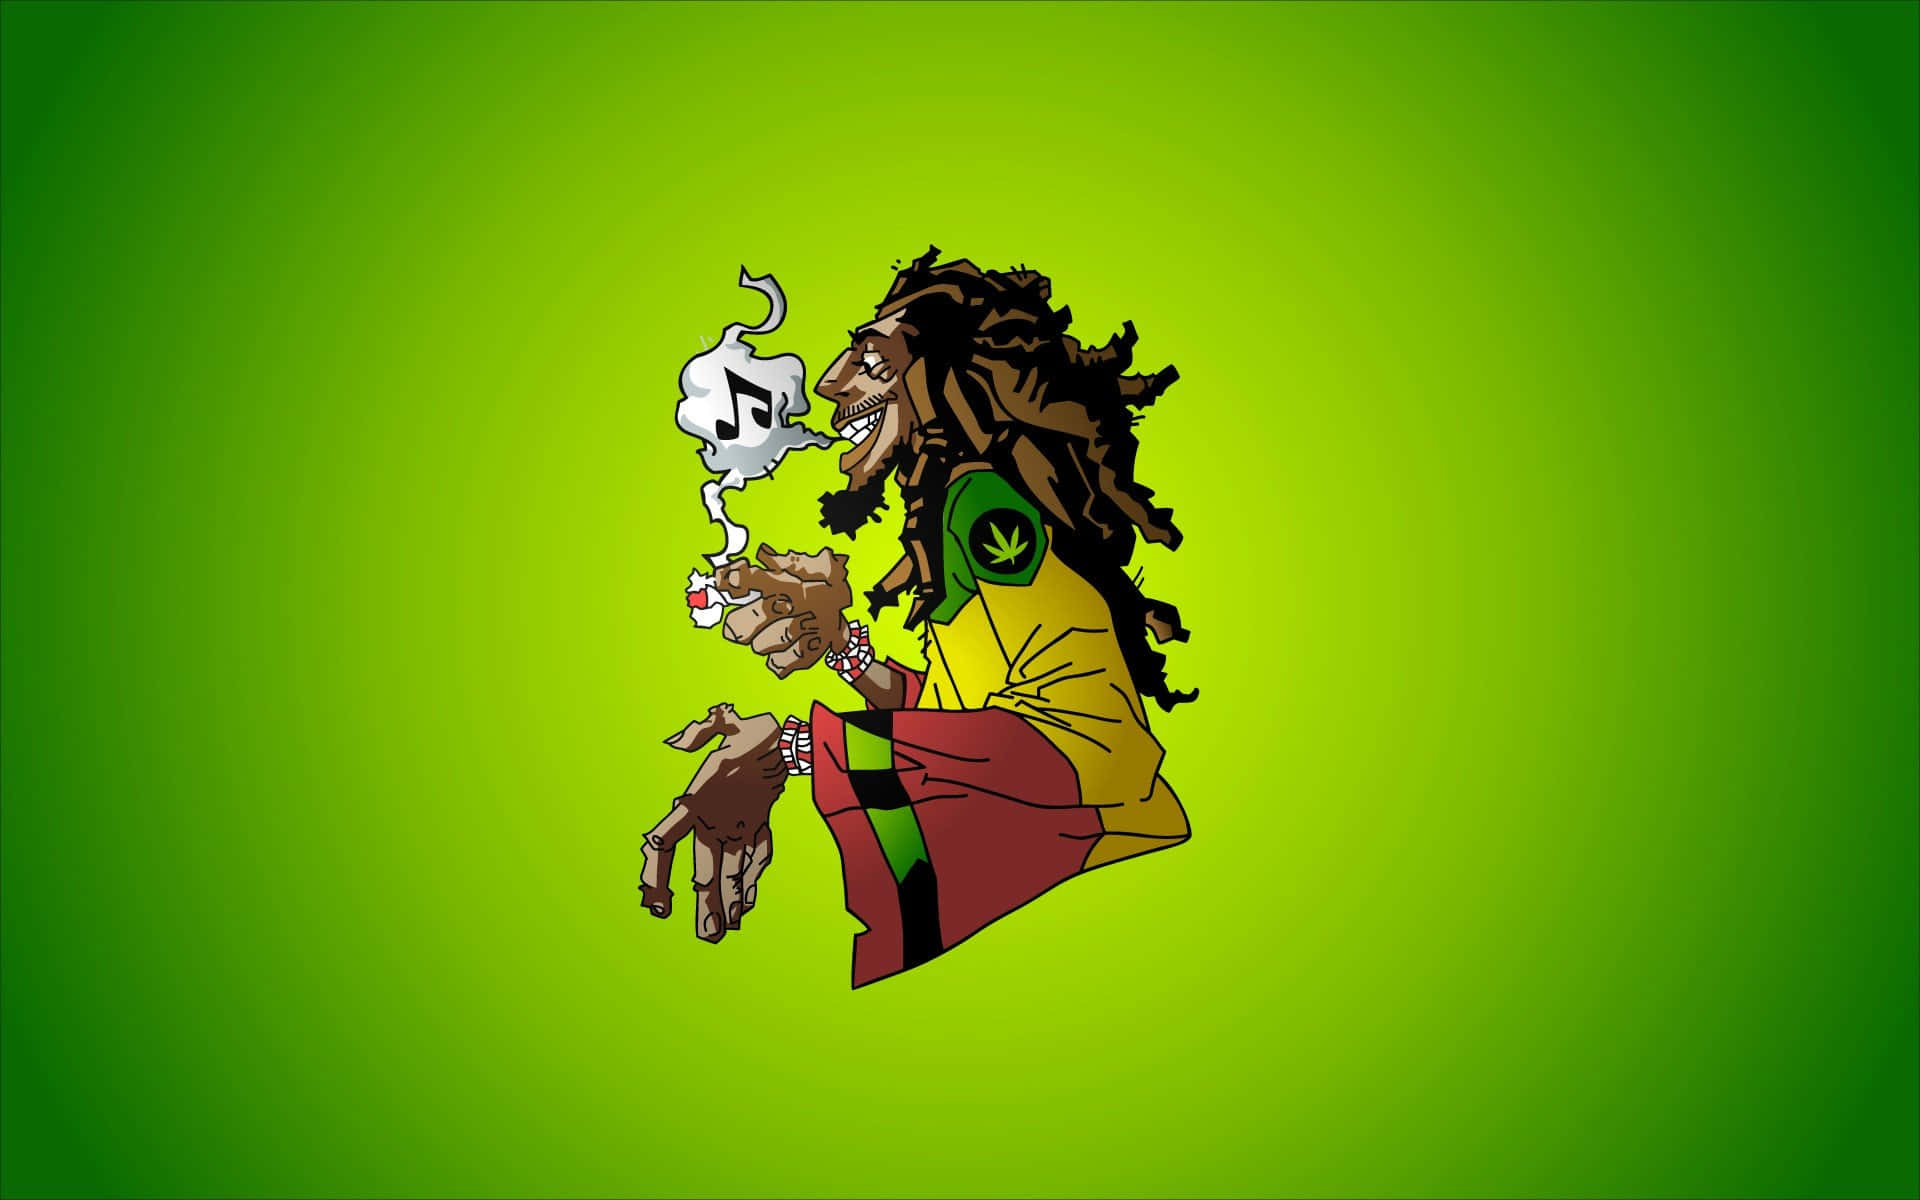 Reggae vibes - Rastafaribriller af jamaicansk musik. Wallpaper